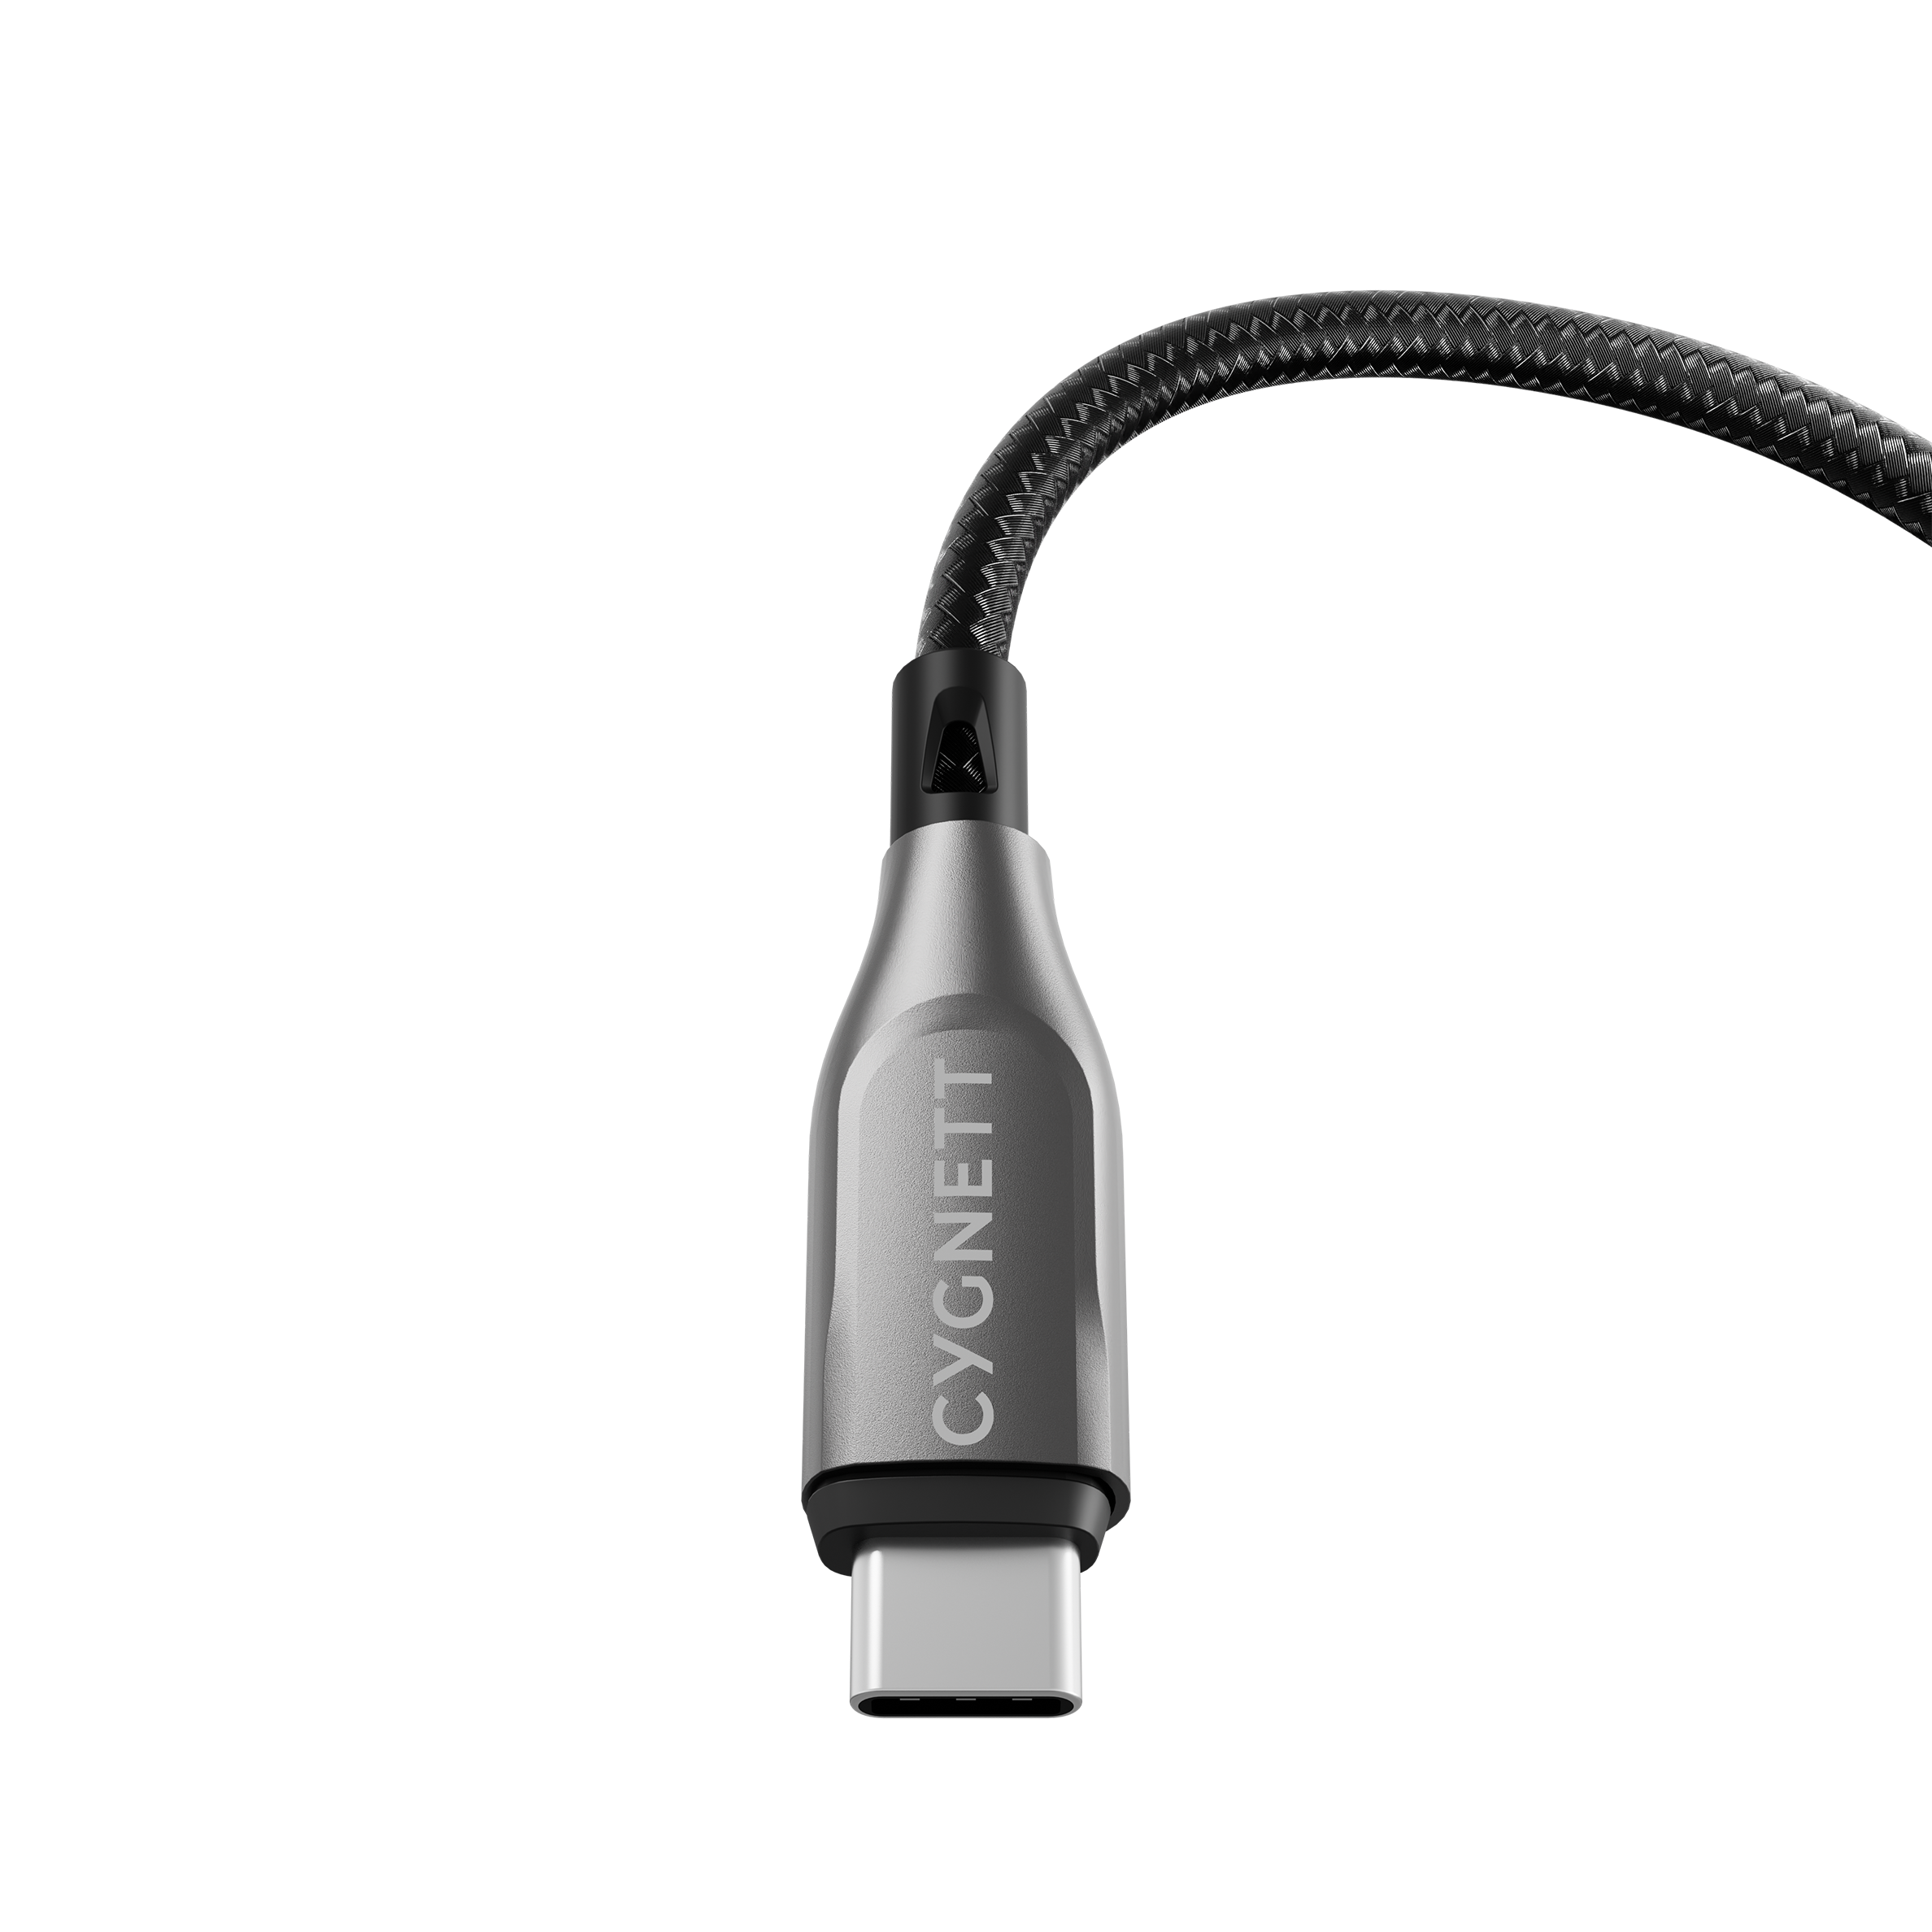 Armoured USB-C to USB-C Cable 3M  – Black - Cygnett (AU)